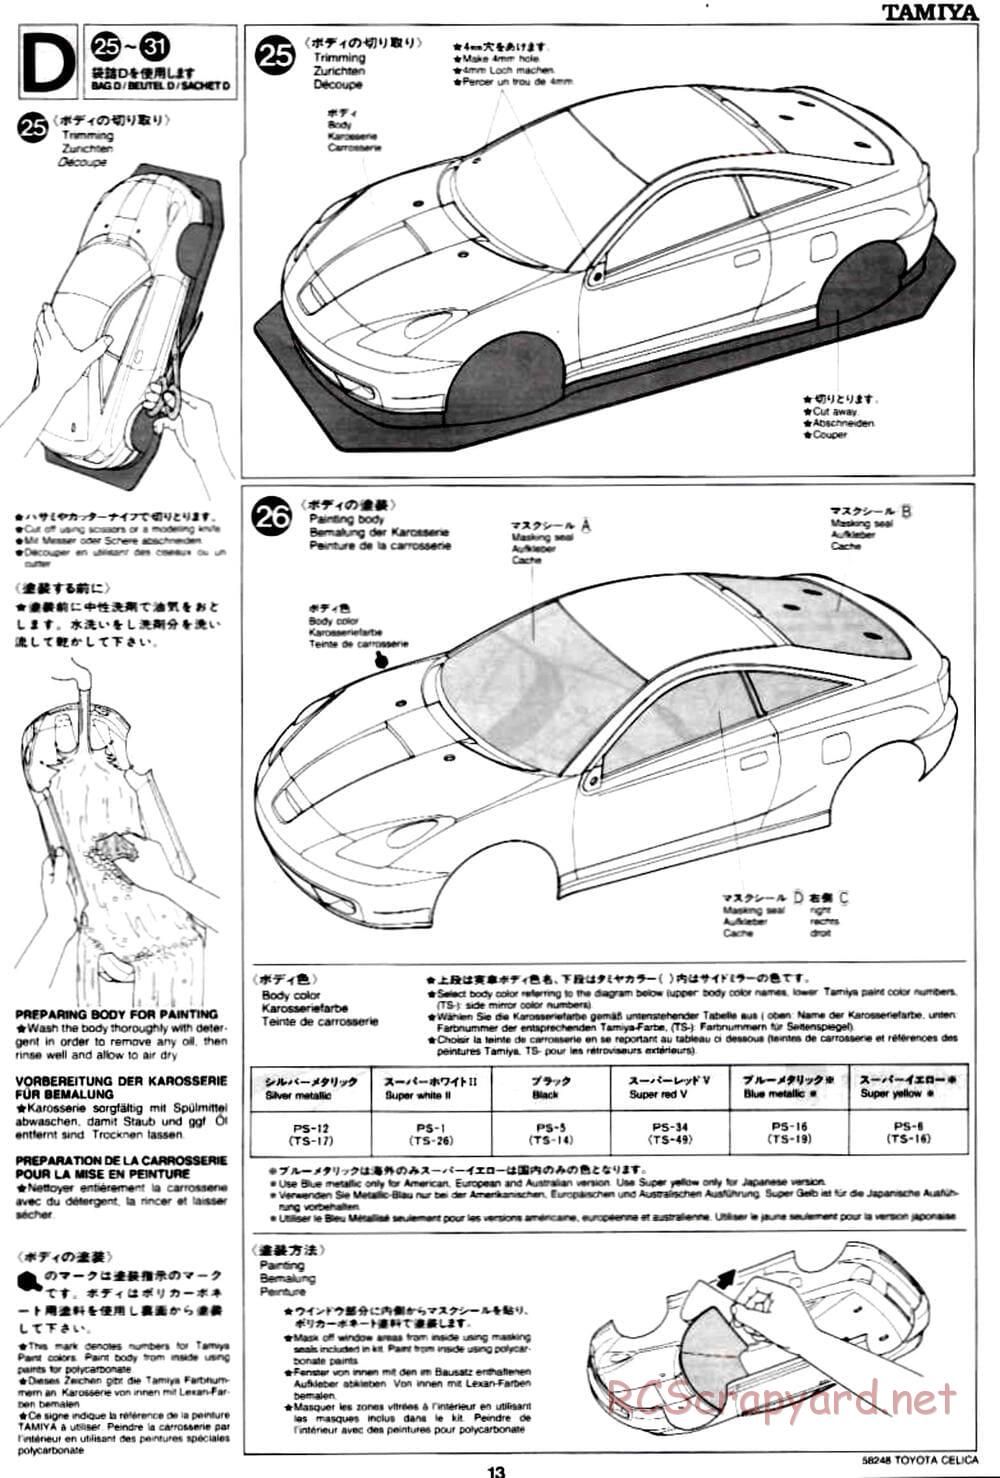 Tamiya - Toyota Celica - FF-02 Chassis - Manual - Page 13